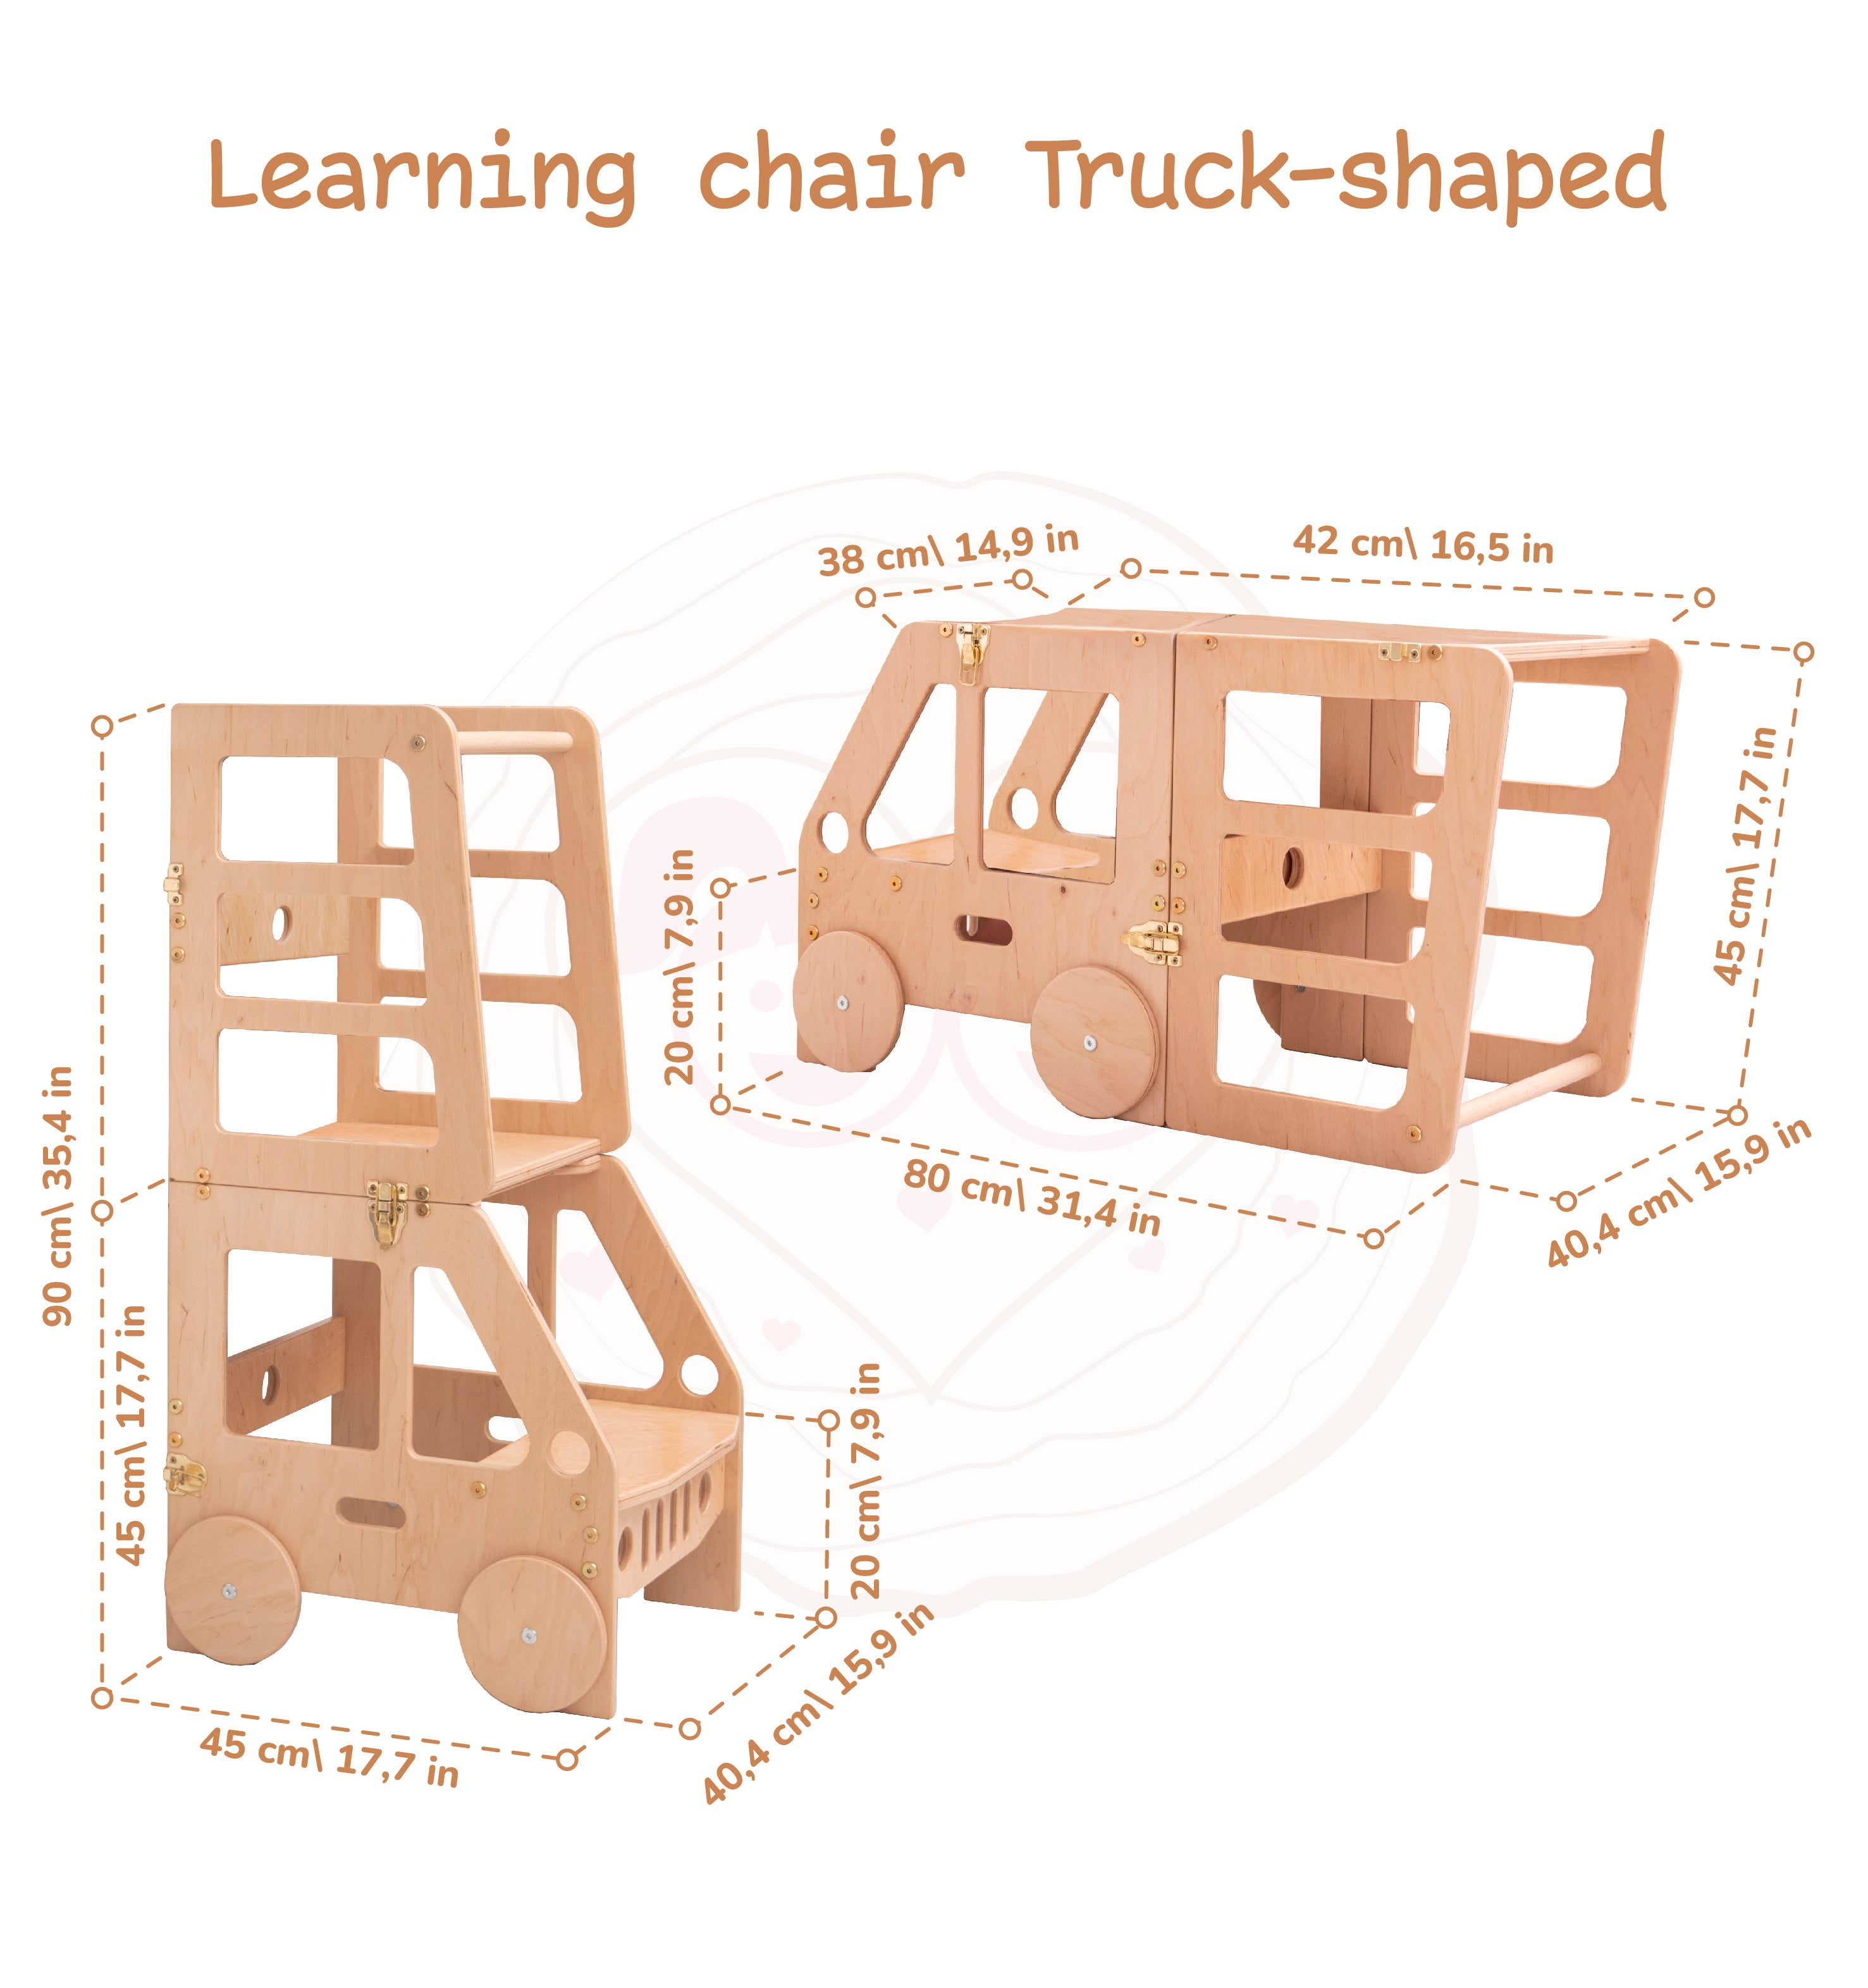 Design Thinking chair — The Educators' Playground